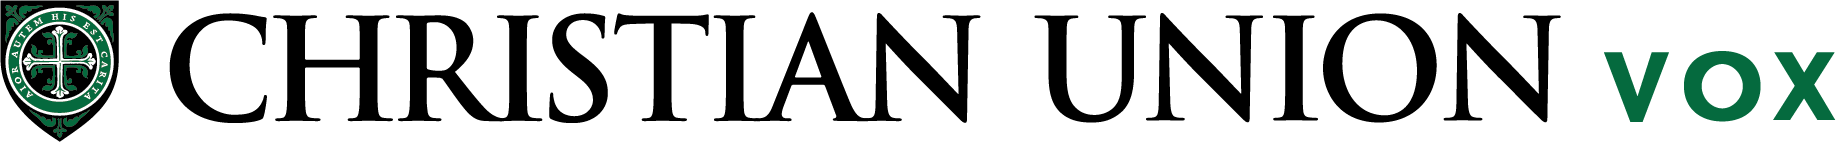 Christian Union Vox Logo